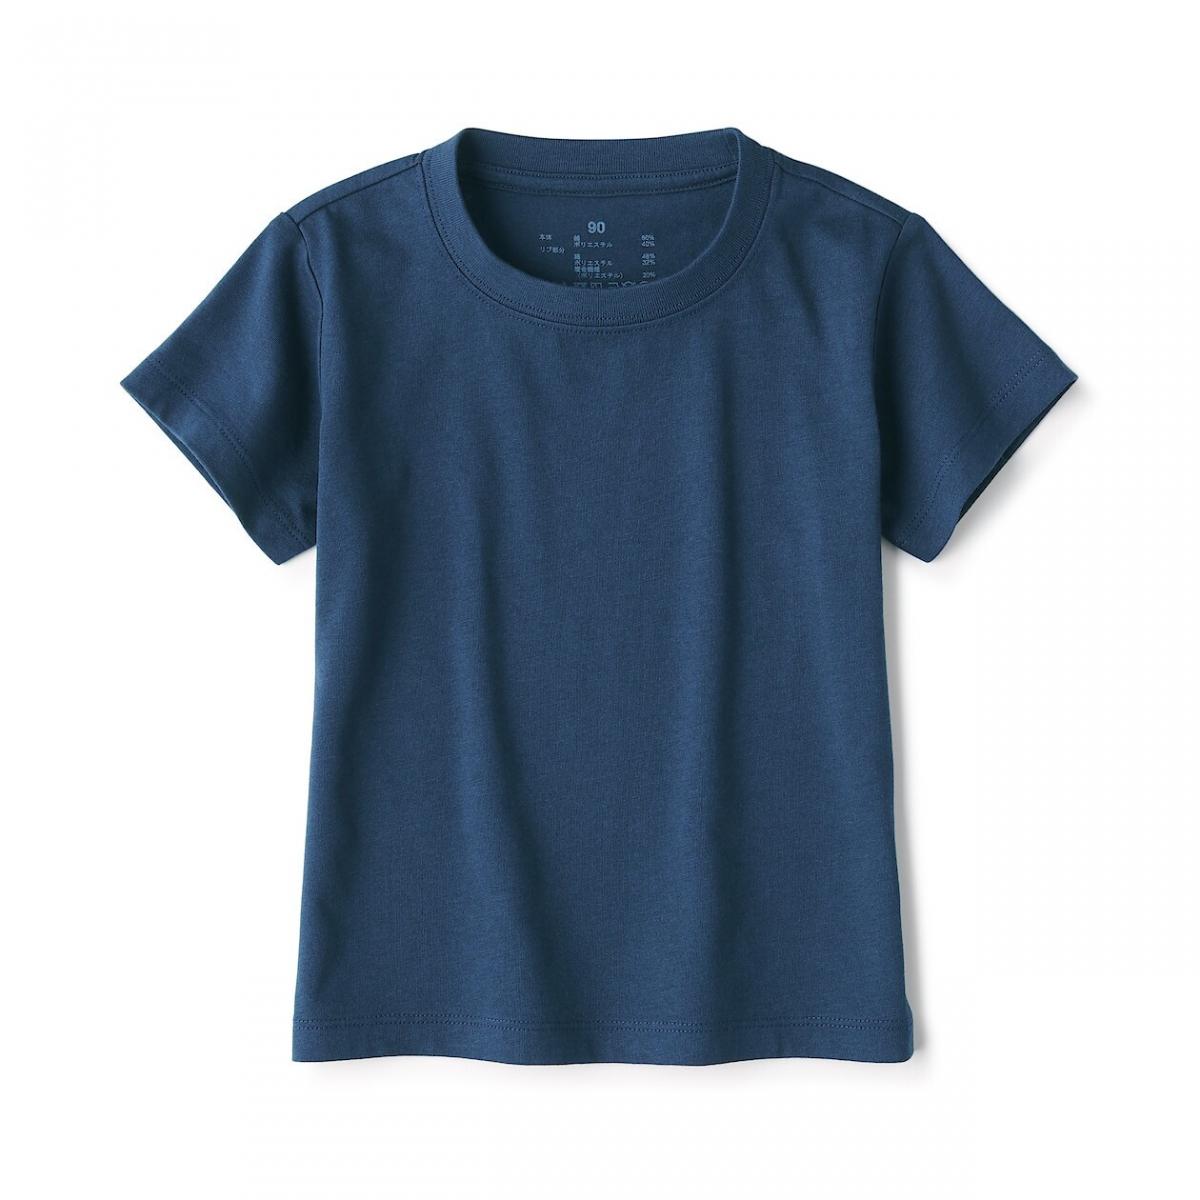 Children's Cotton Mix Quick Dry Short Sleeves T-Shirt - Navy 80